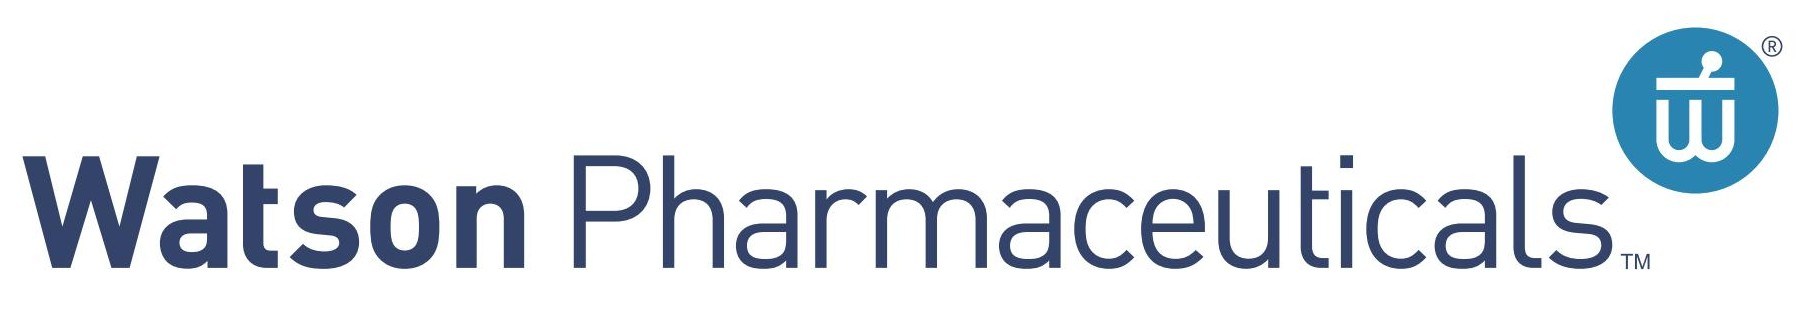 Watson Pharmaceuticals Logo [EPS File]